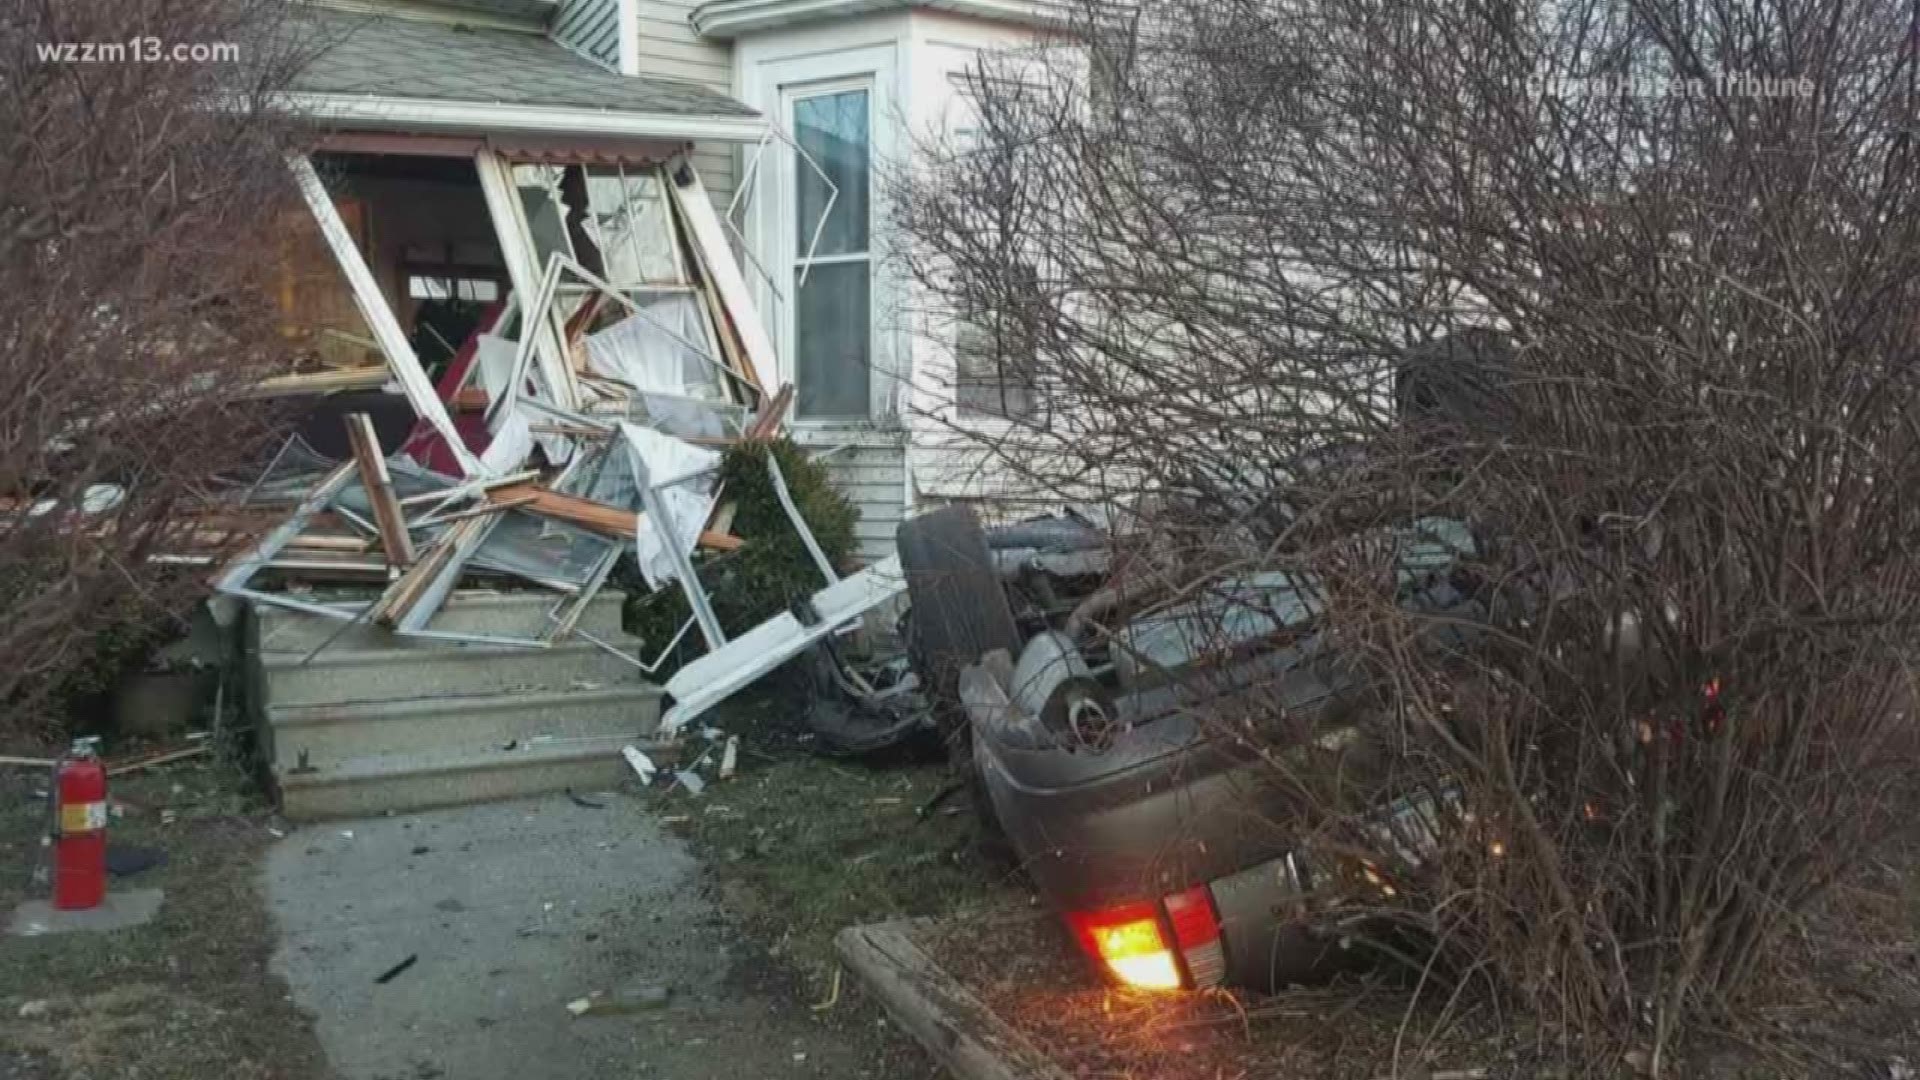 Man injured in Grand Haven crash, porch destroyed